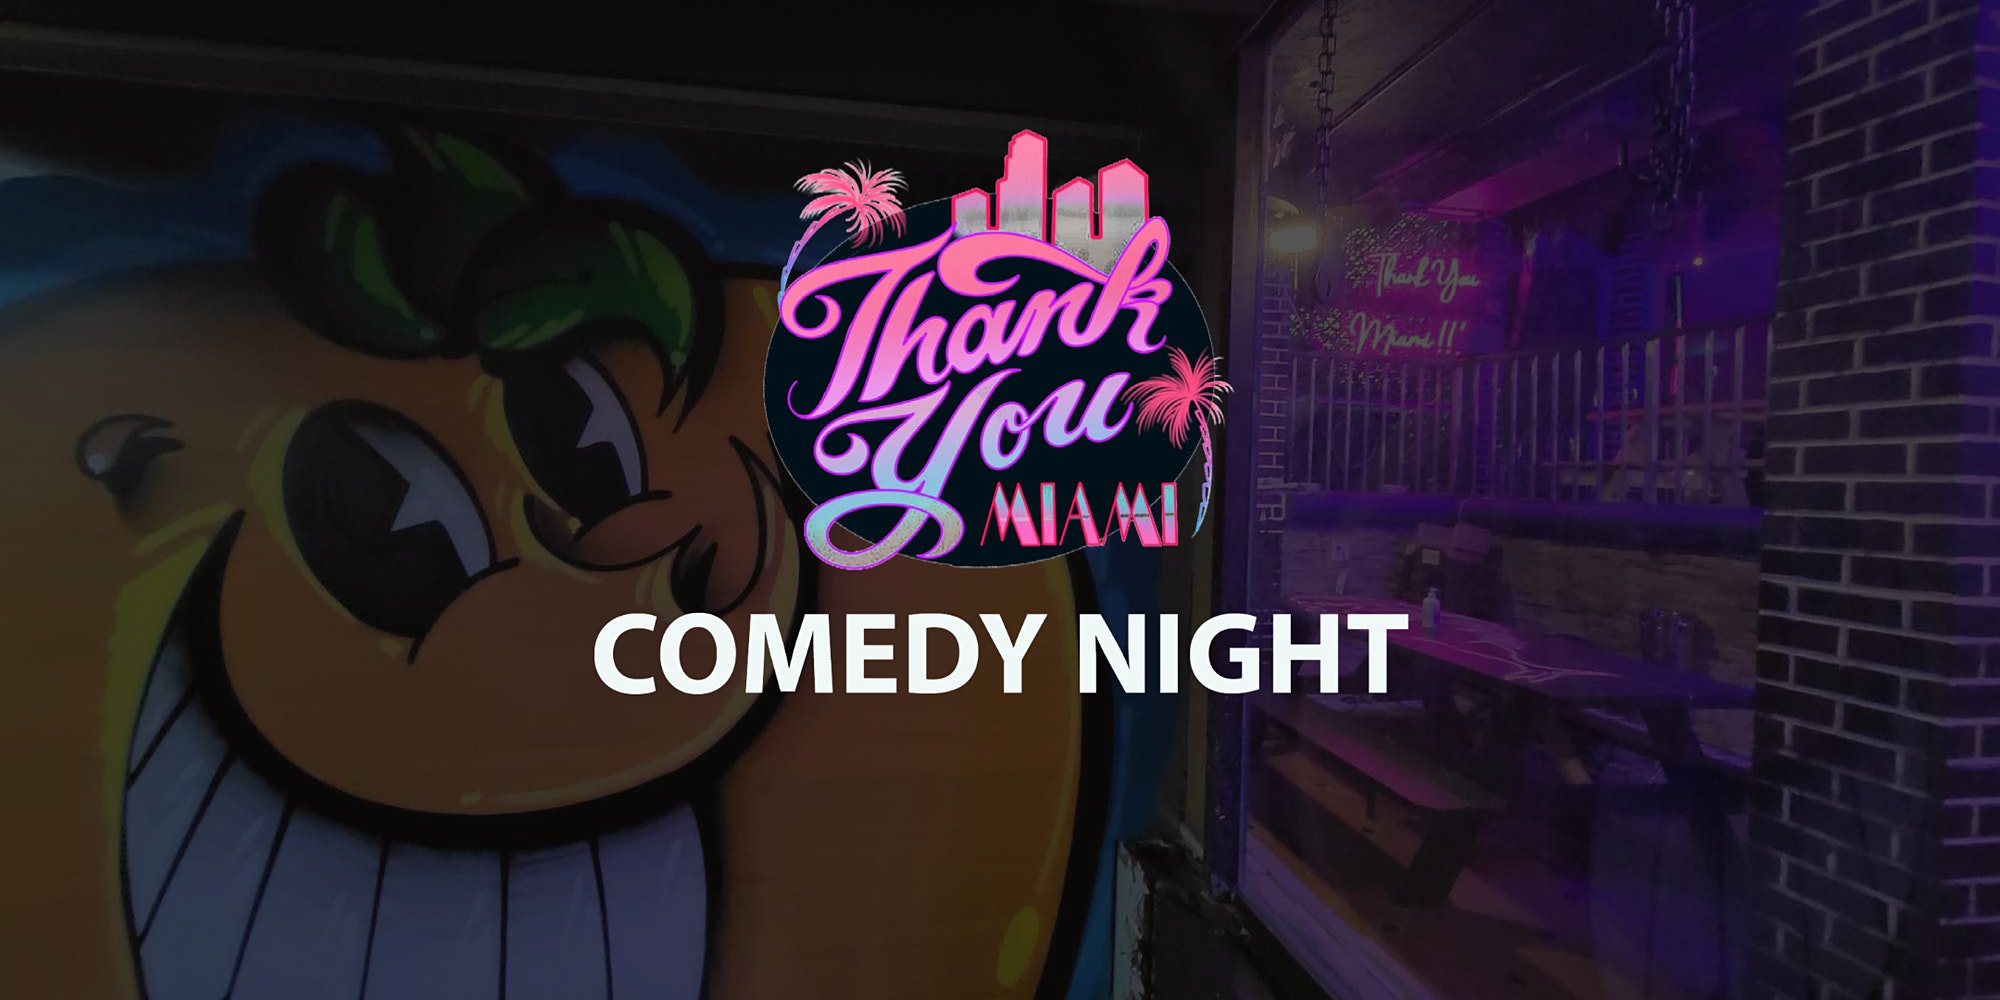 Thank You Miami Comedy Night